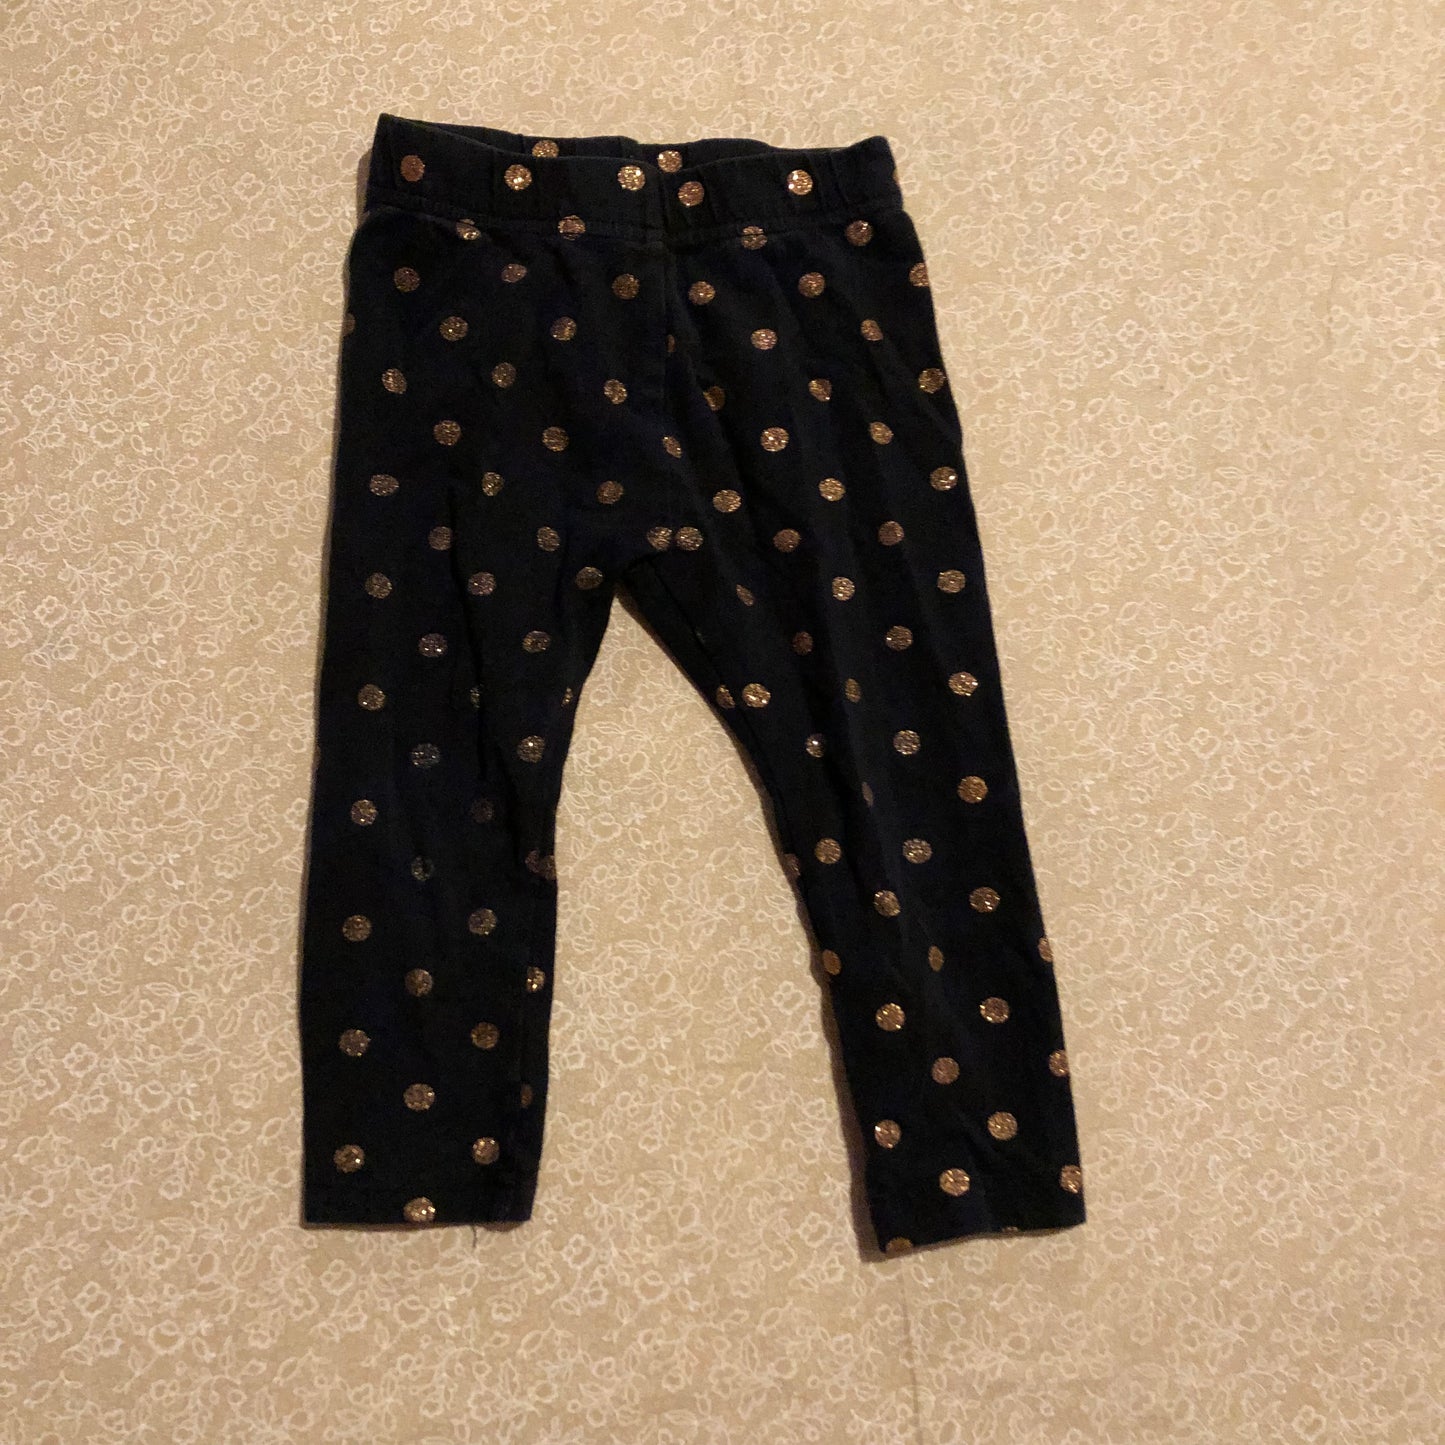 2-joe-fresh-pants-black-pink-dots-leggings